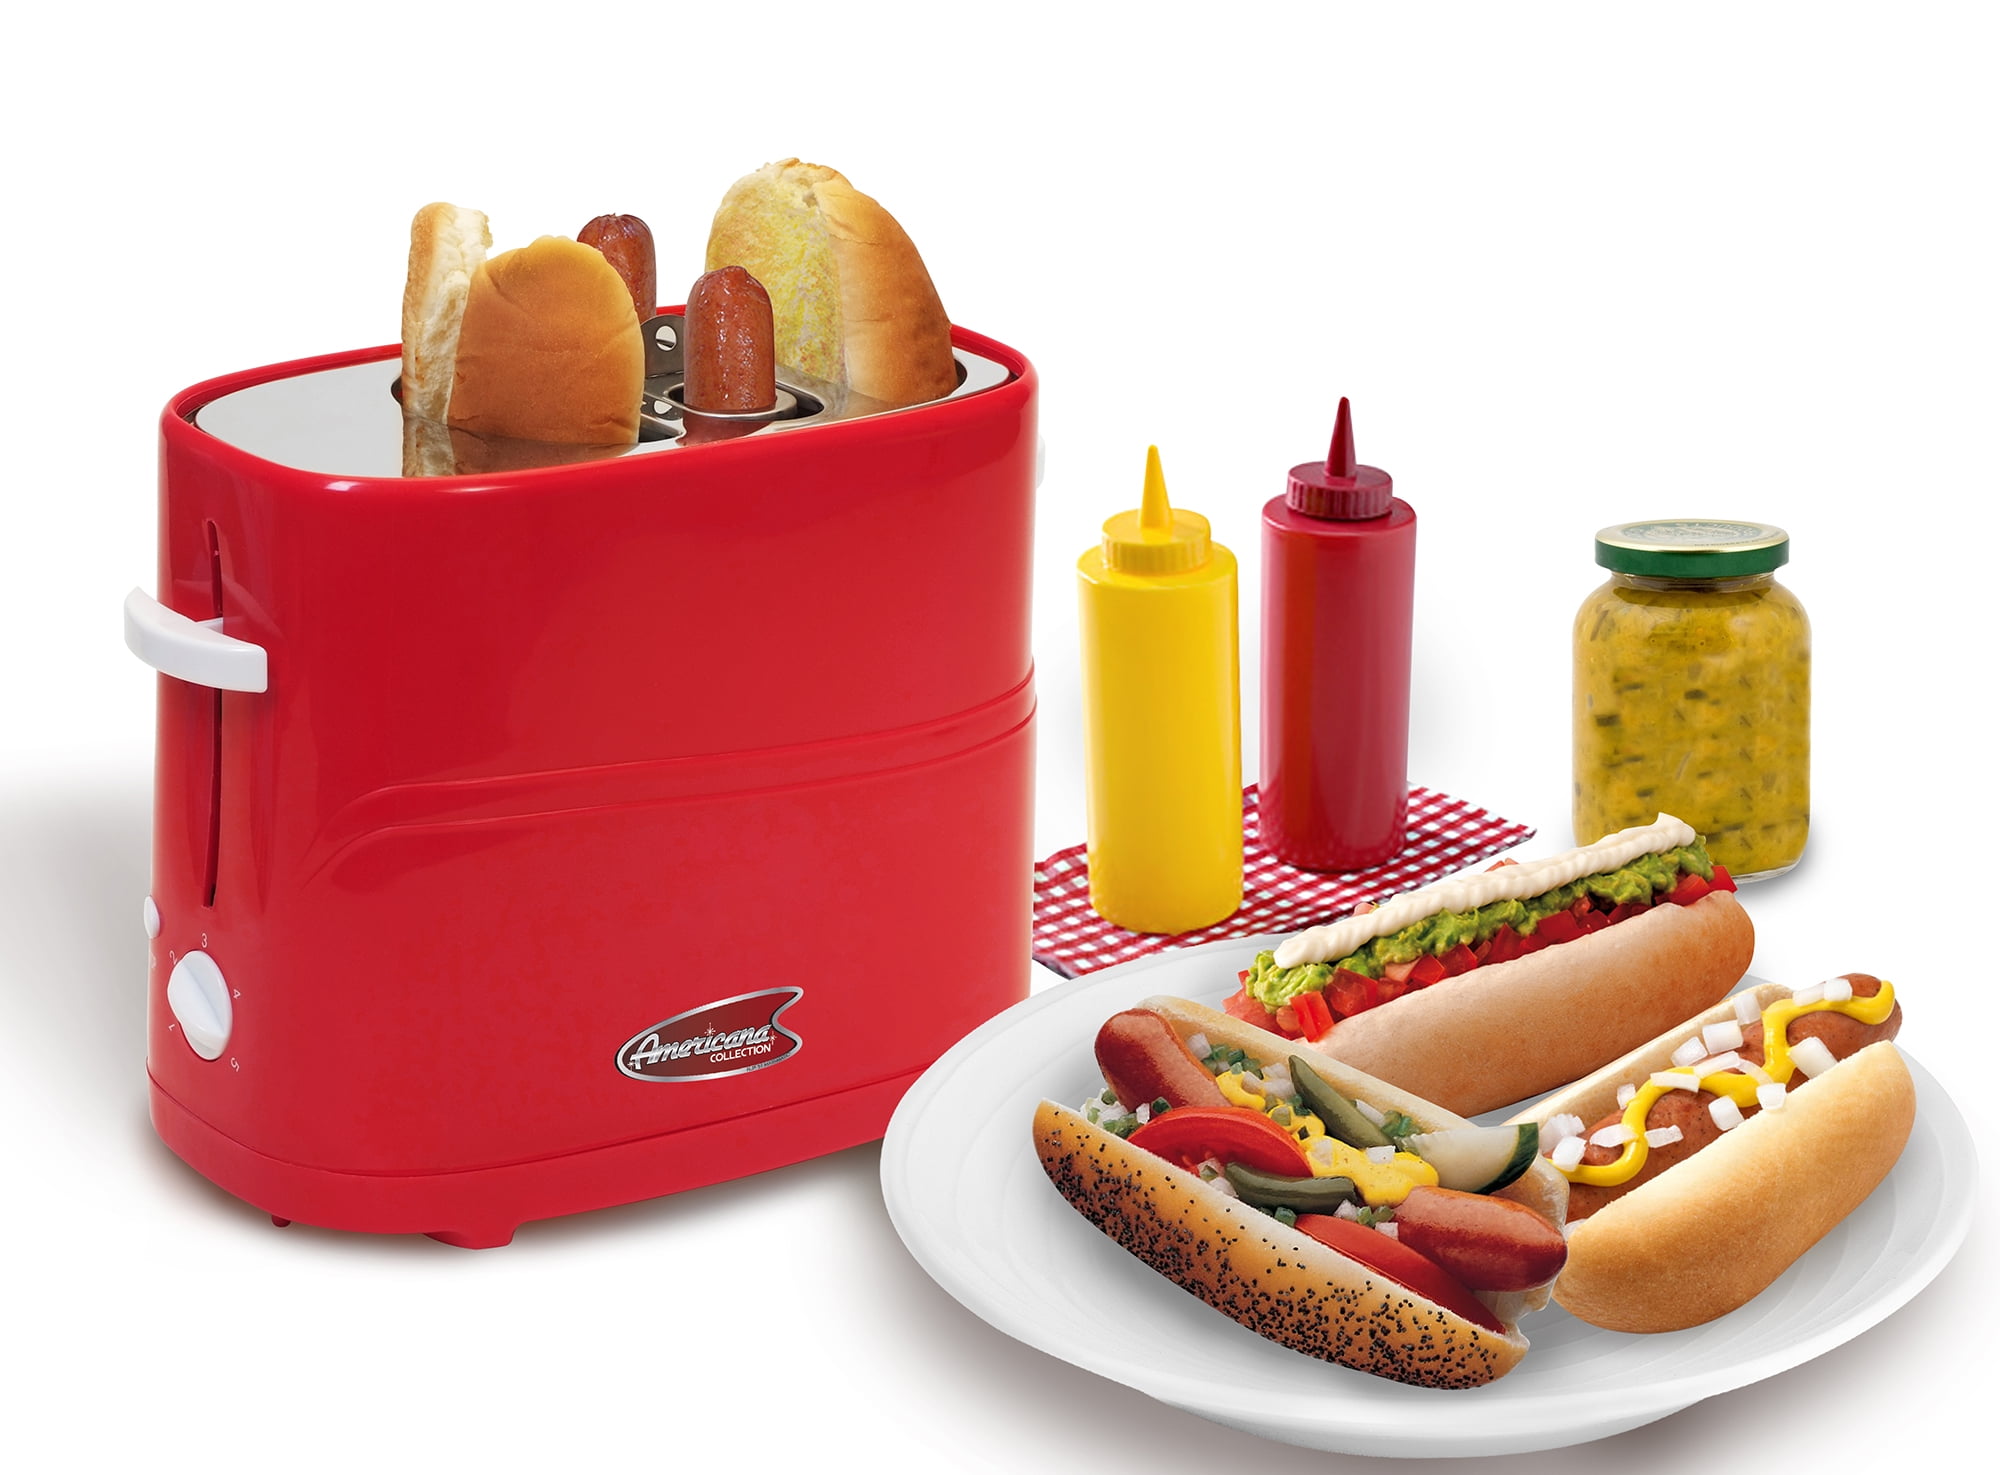 File:Hot Dog Toaster.jpg - Wikipedia